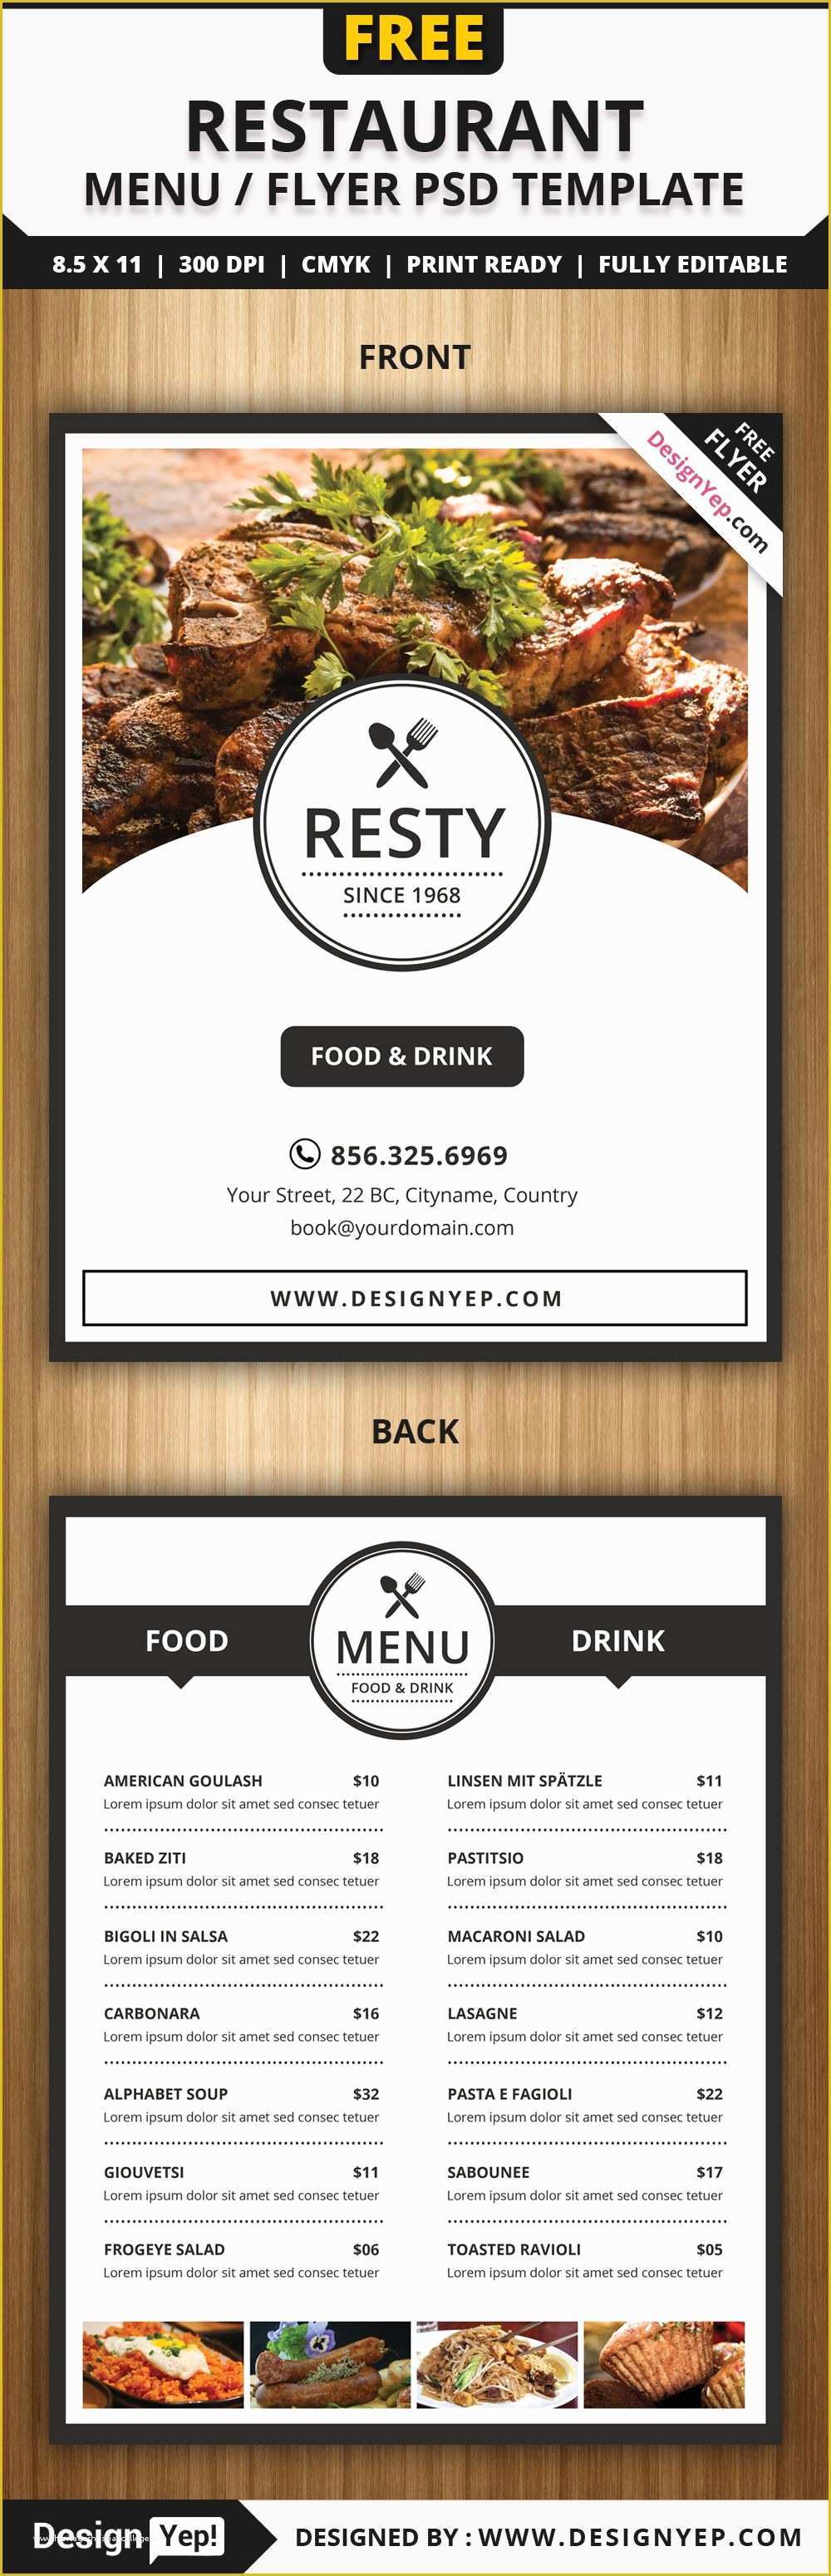 Restaurant Menu Design Templates Free Of Free Restaurant Menu Flyer Psd Template